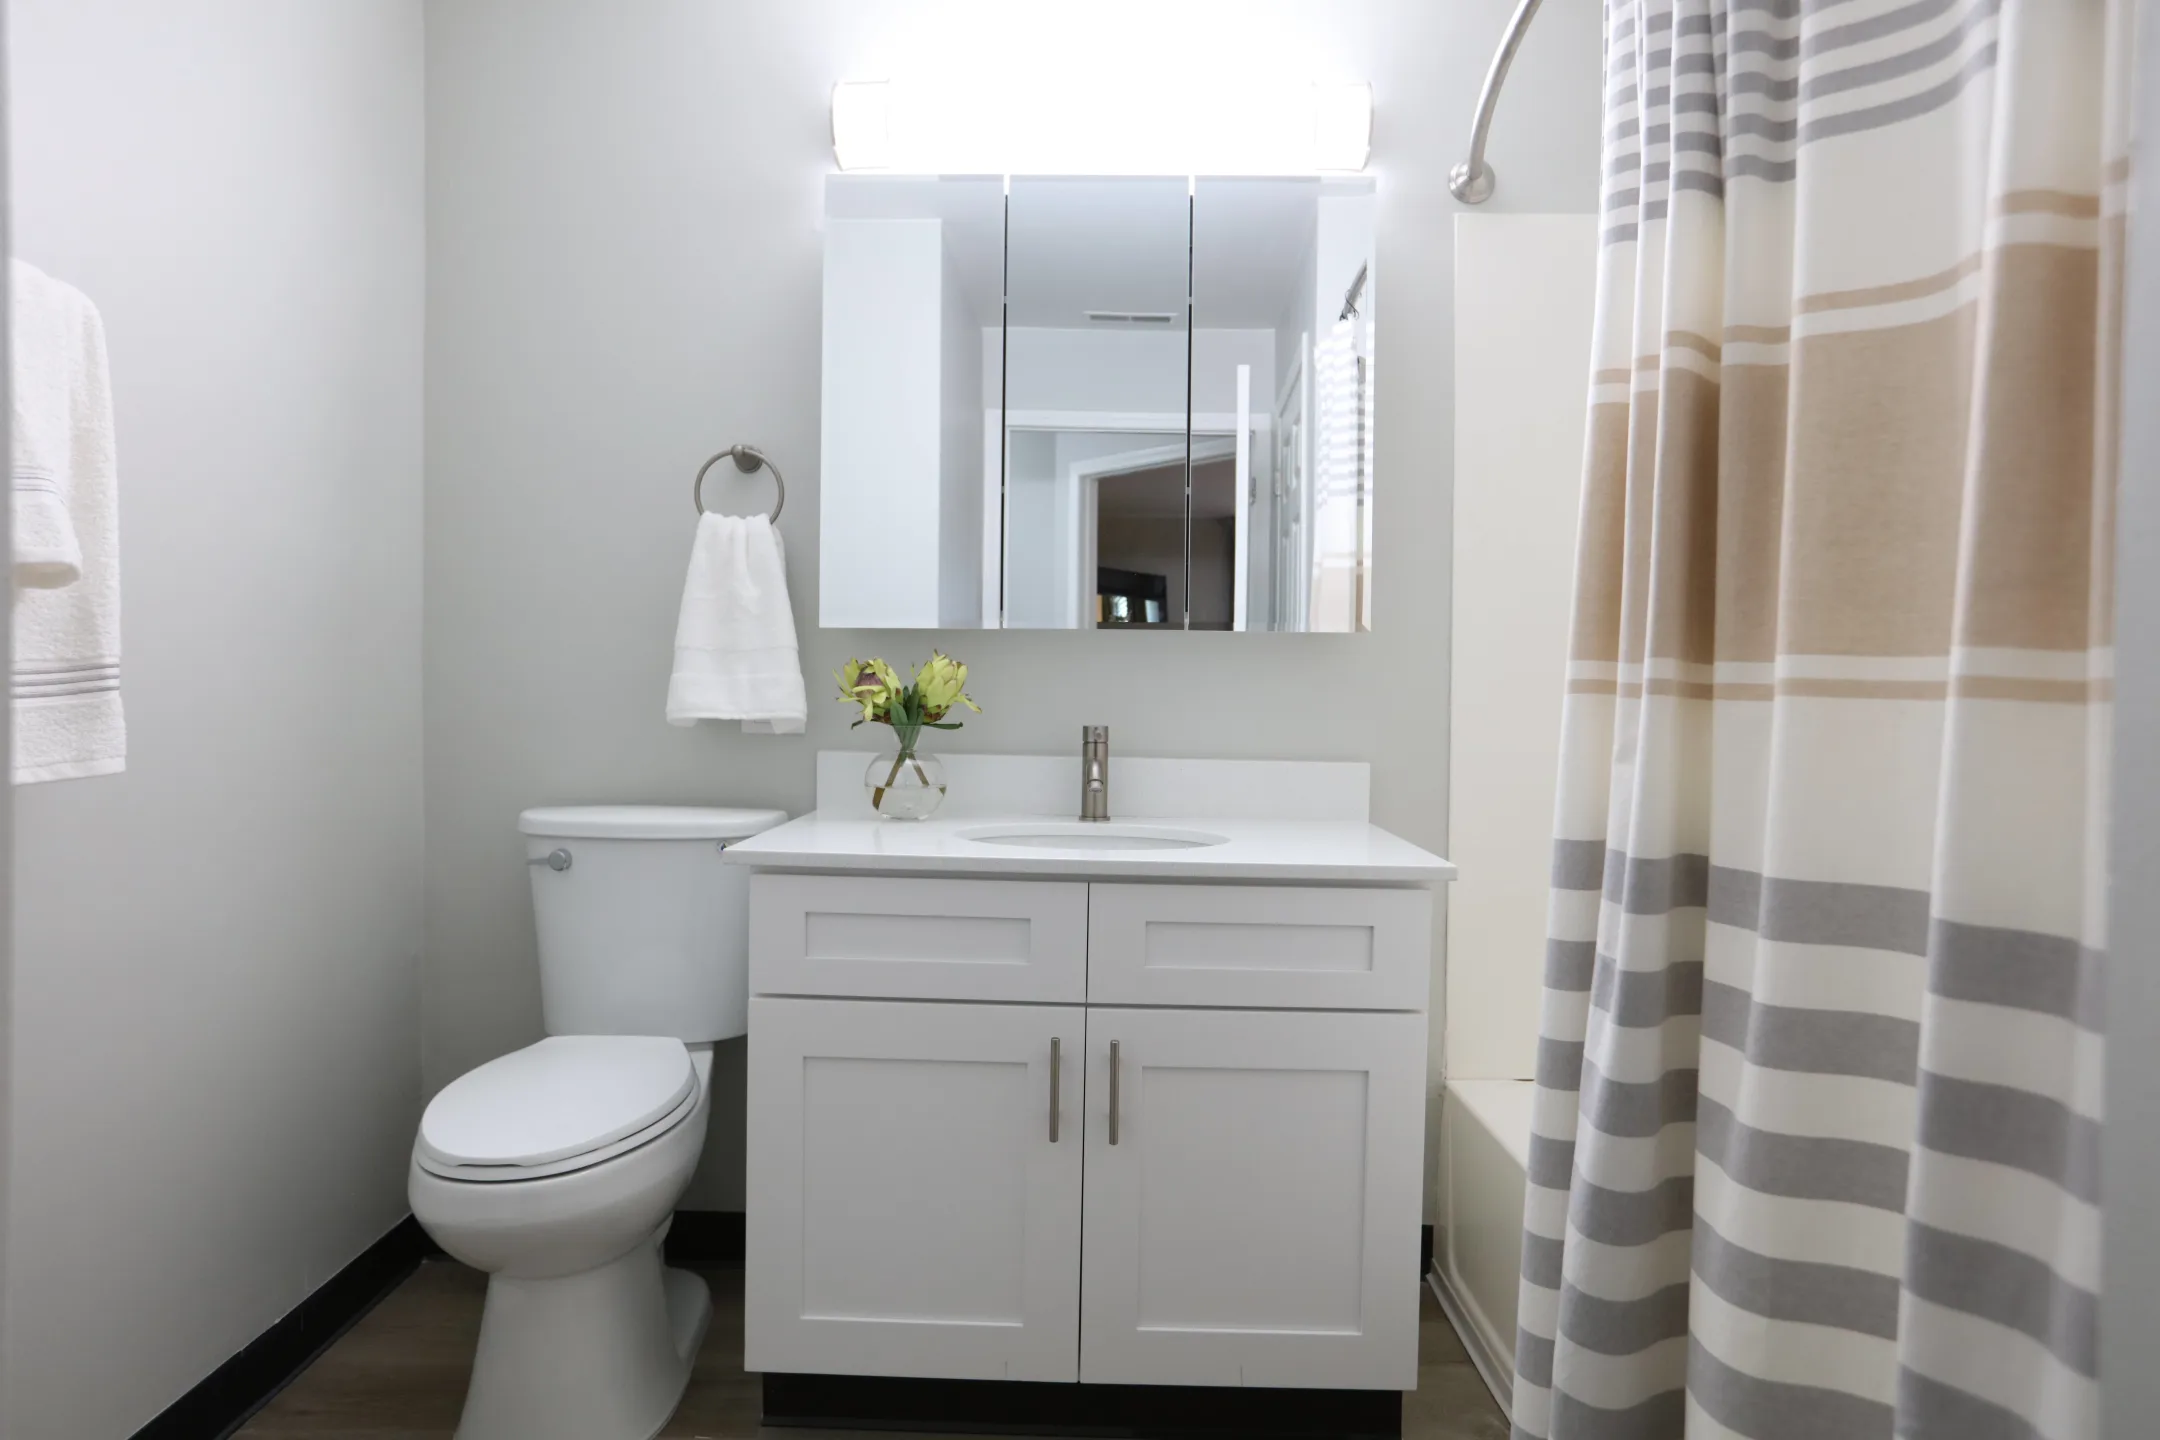 Bathroom - Evergreen Luxury Apartments - Merrillville, IN